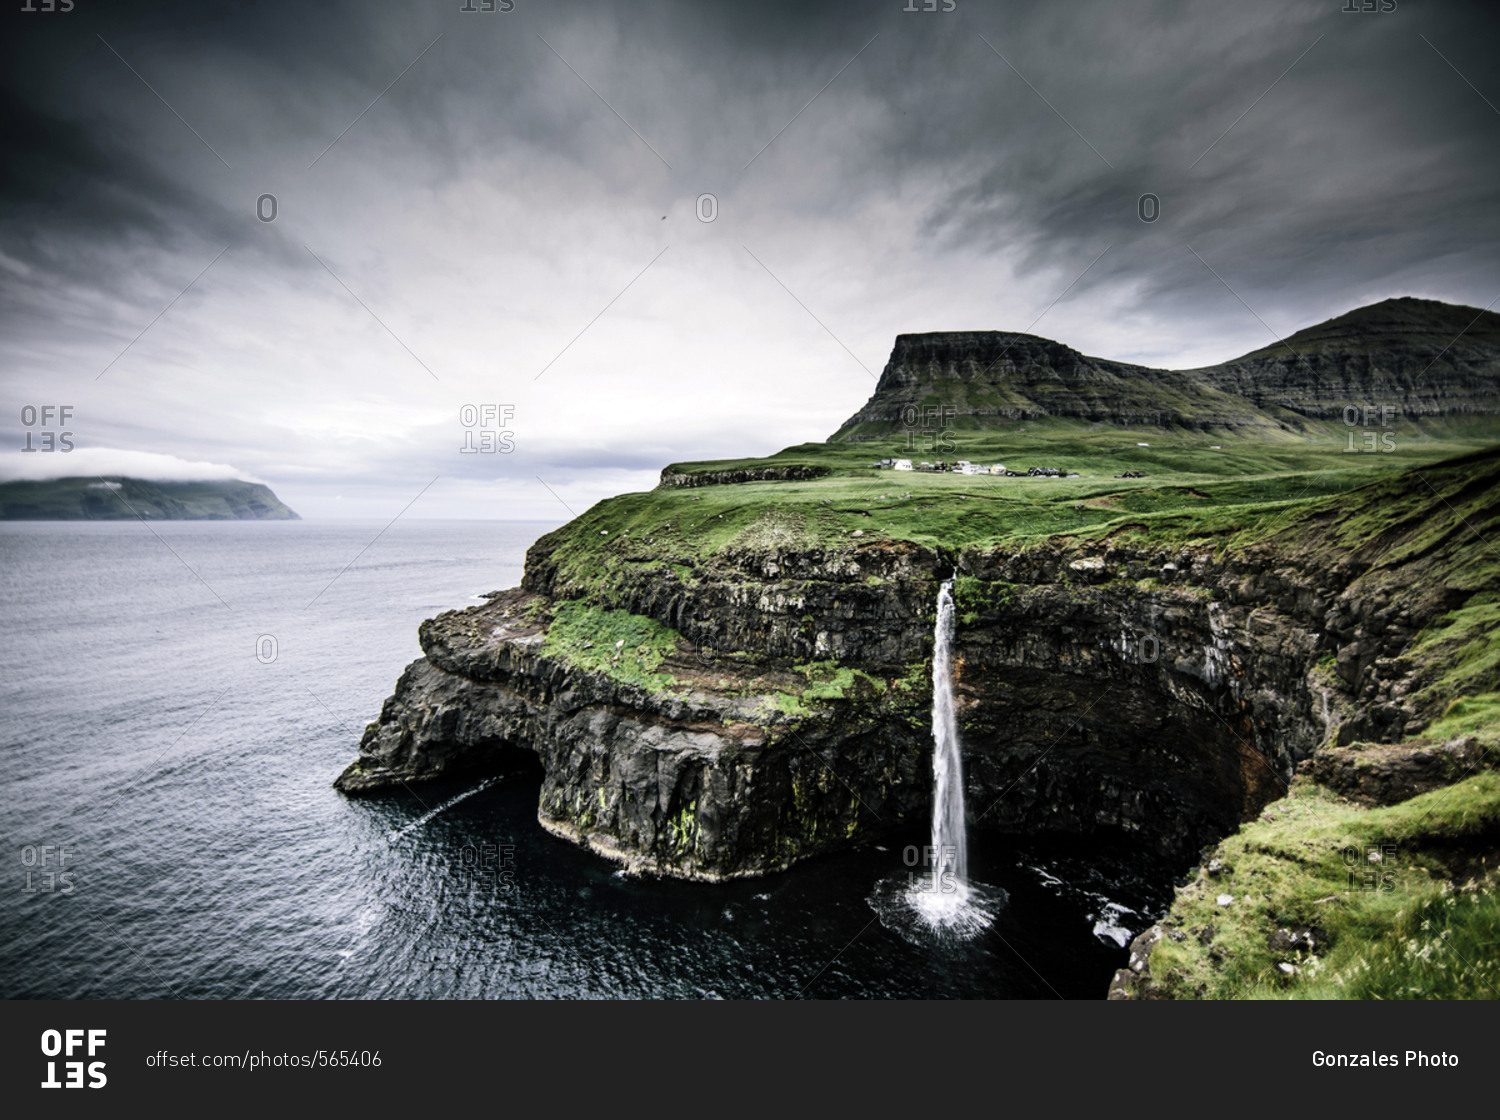 Gasadalur, Faroe Islands - July 23, 2014. Waterfall in Gasadalur, which is a village on Vagar in the Faroe Islands.